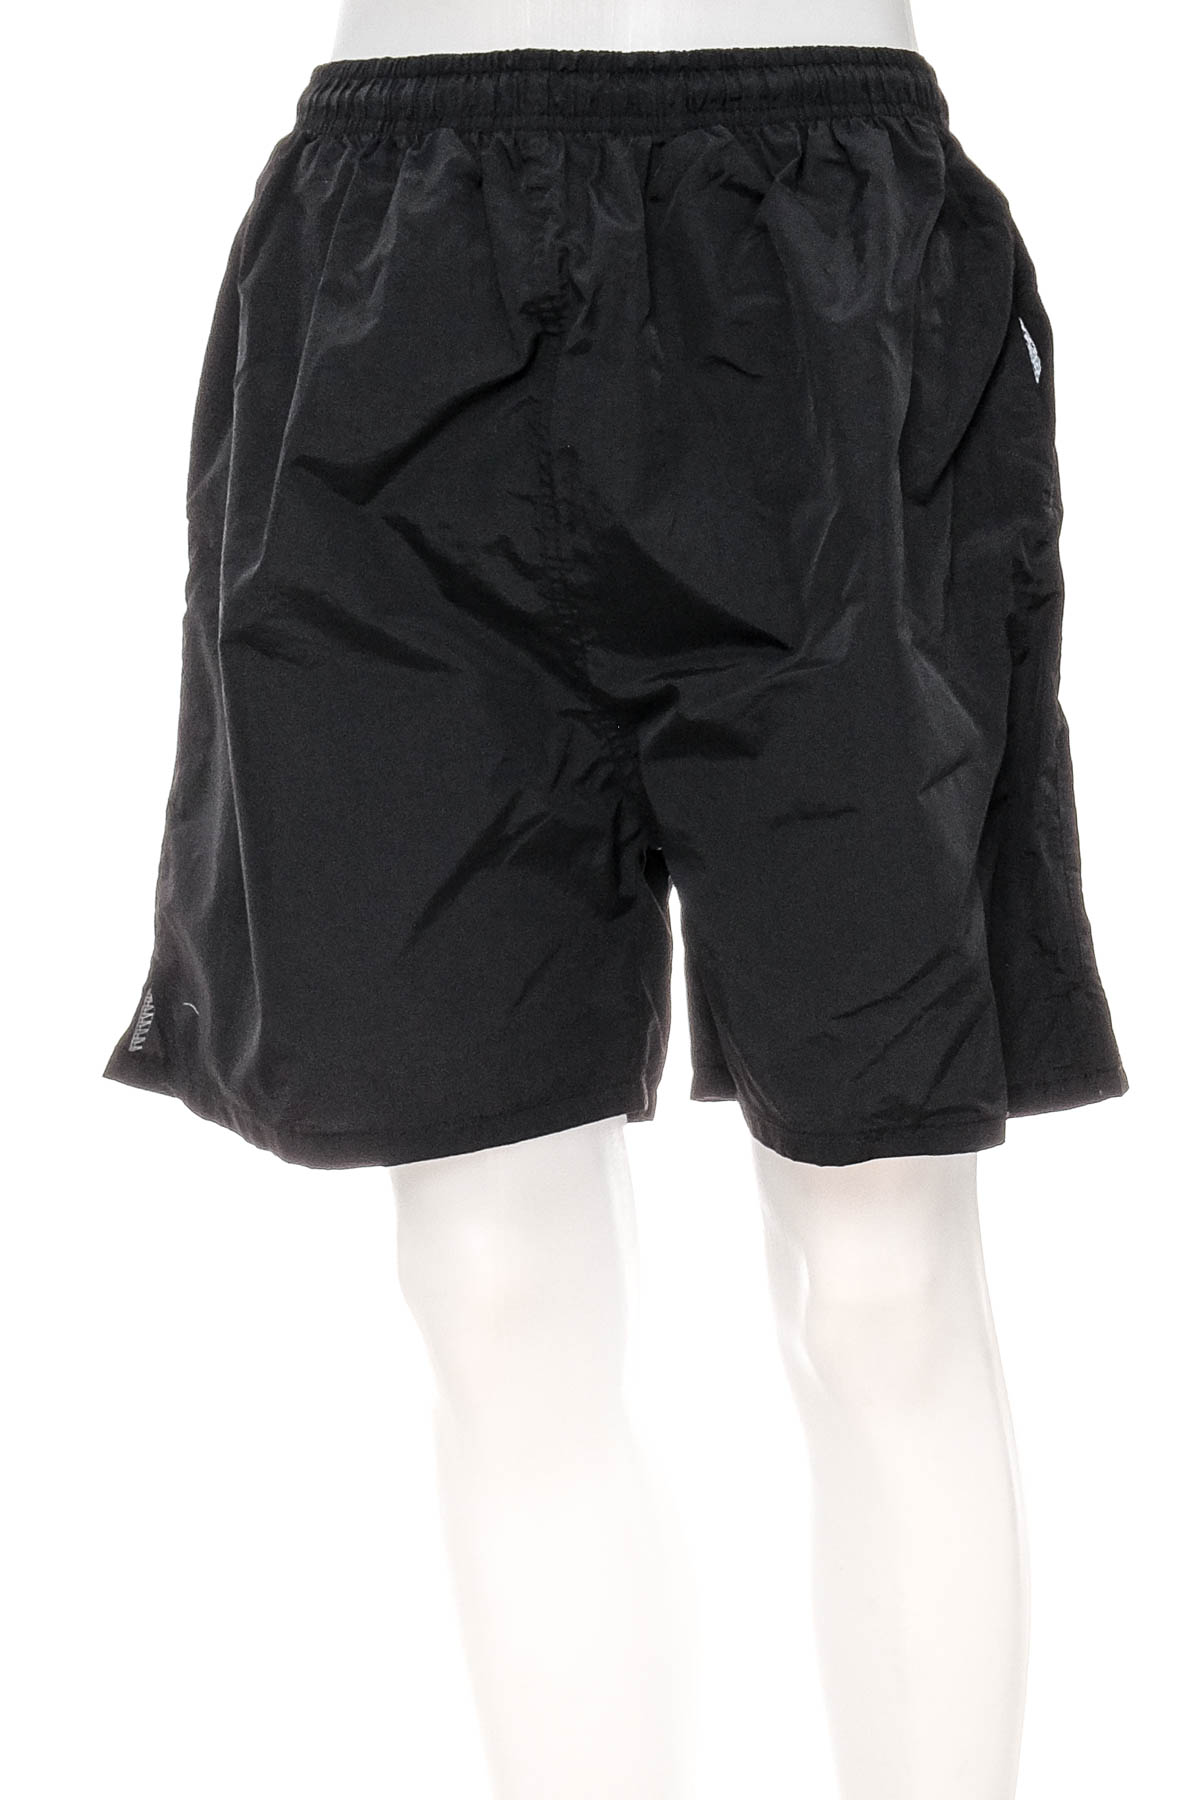 Men's shorts - Sun & Beach - 0